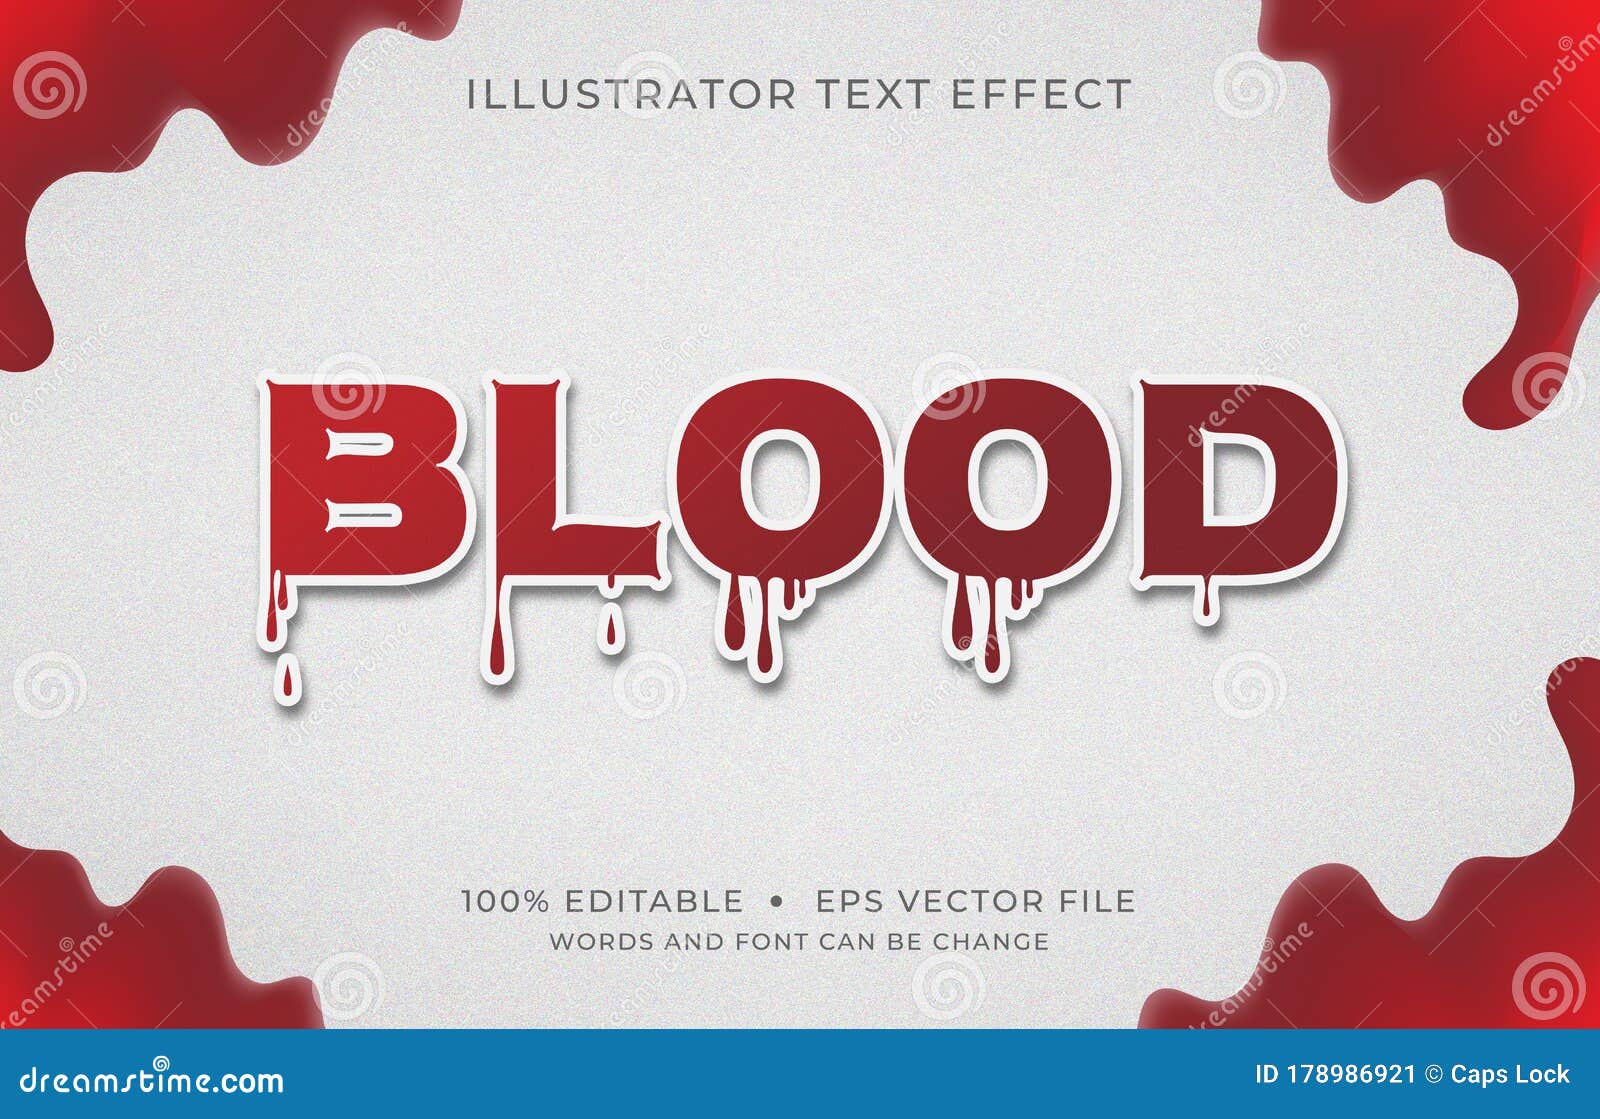 blood description creative writing